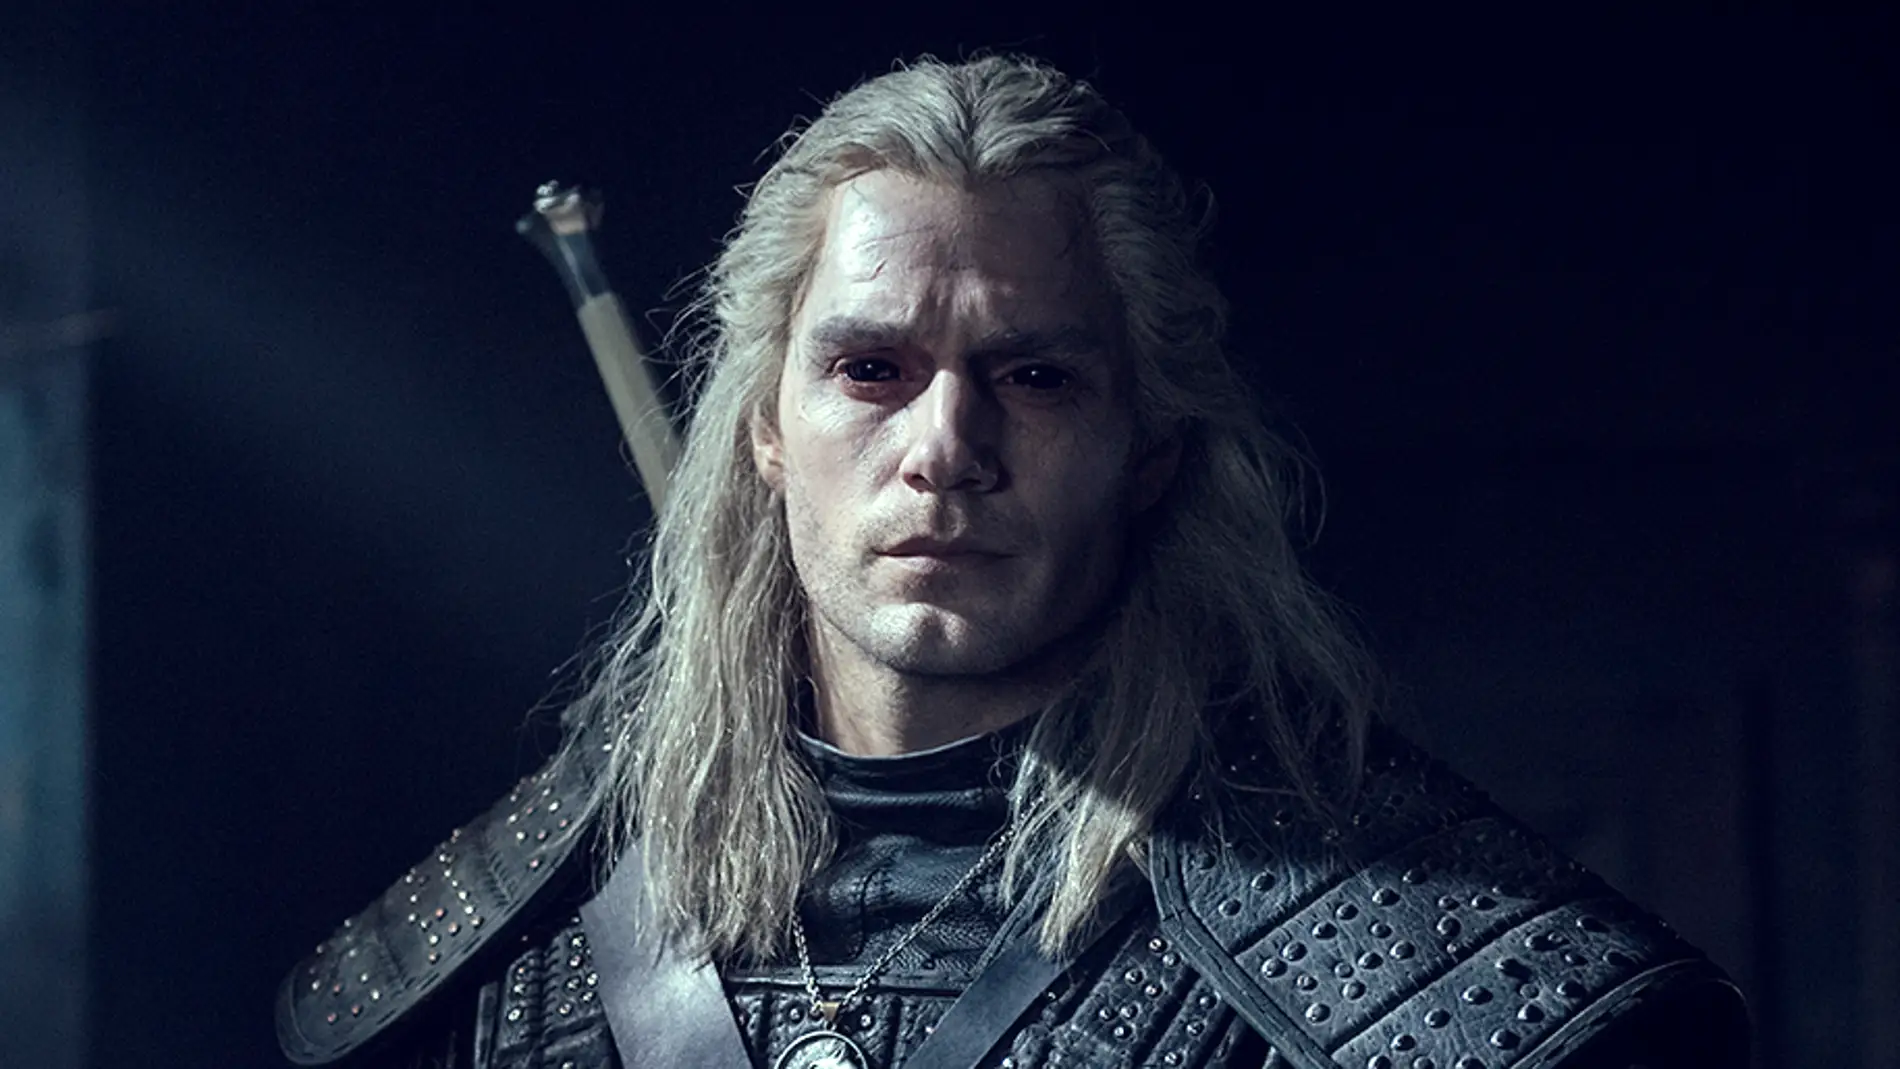 Henry Cavill como Geralt de Rivia en 'The Witcher'